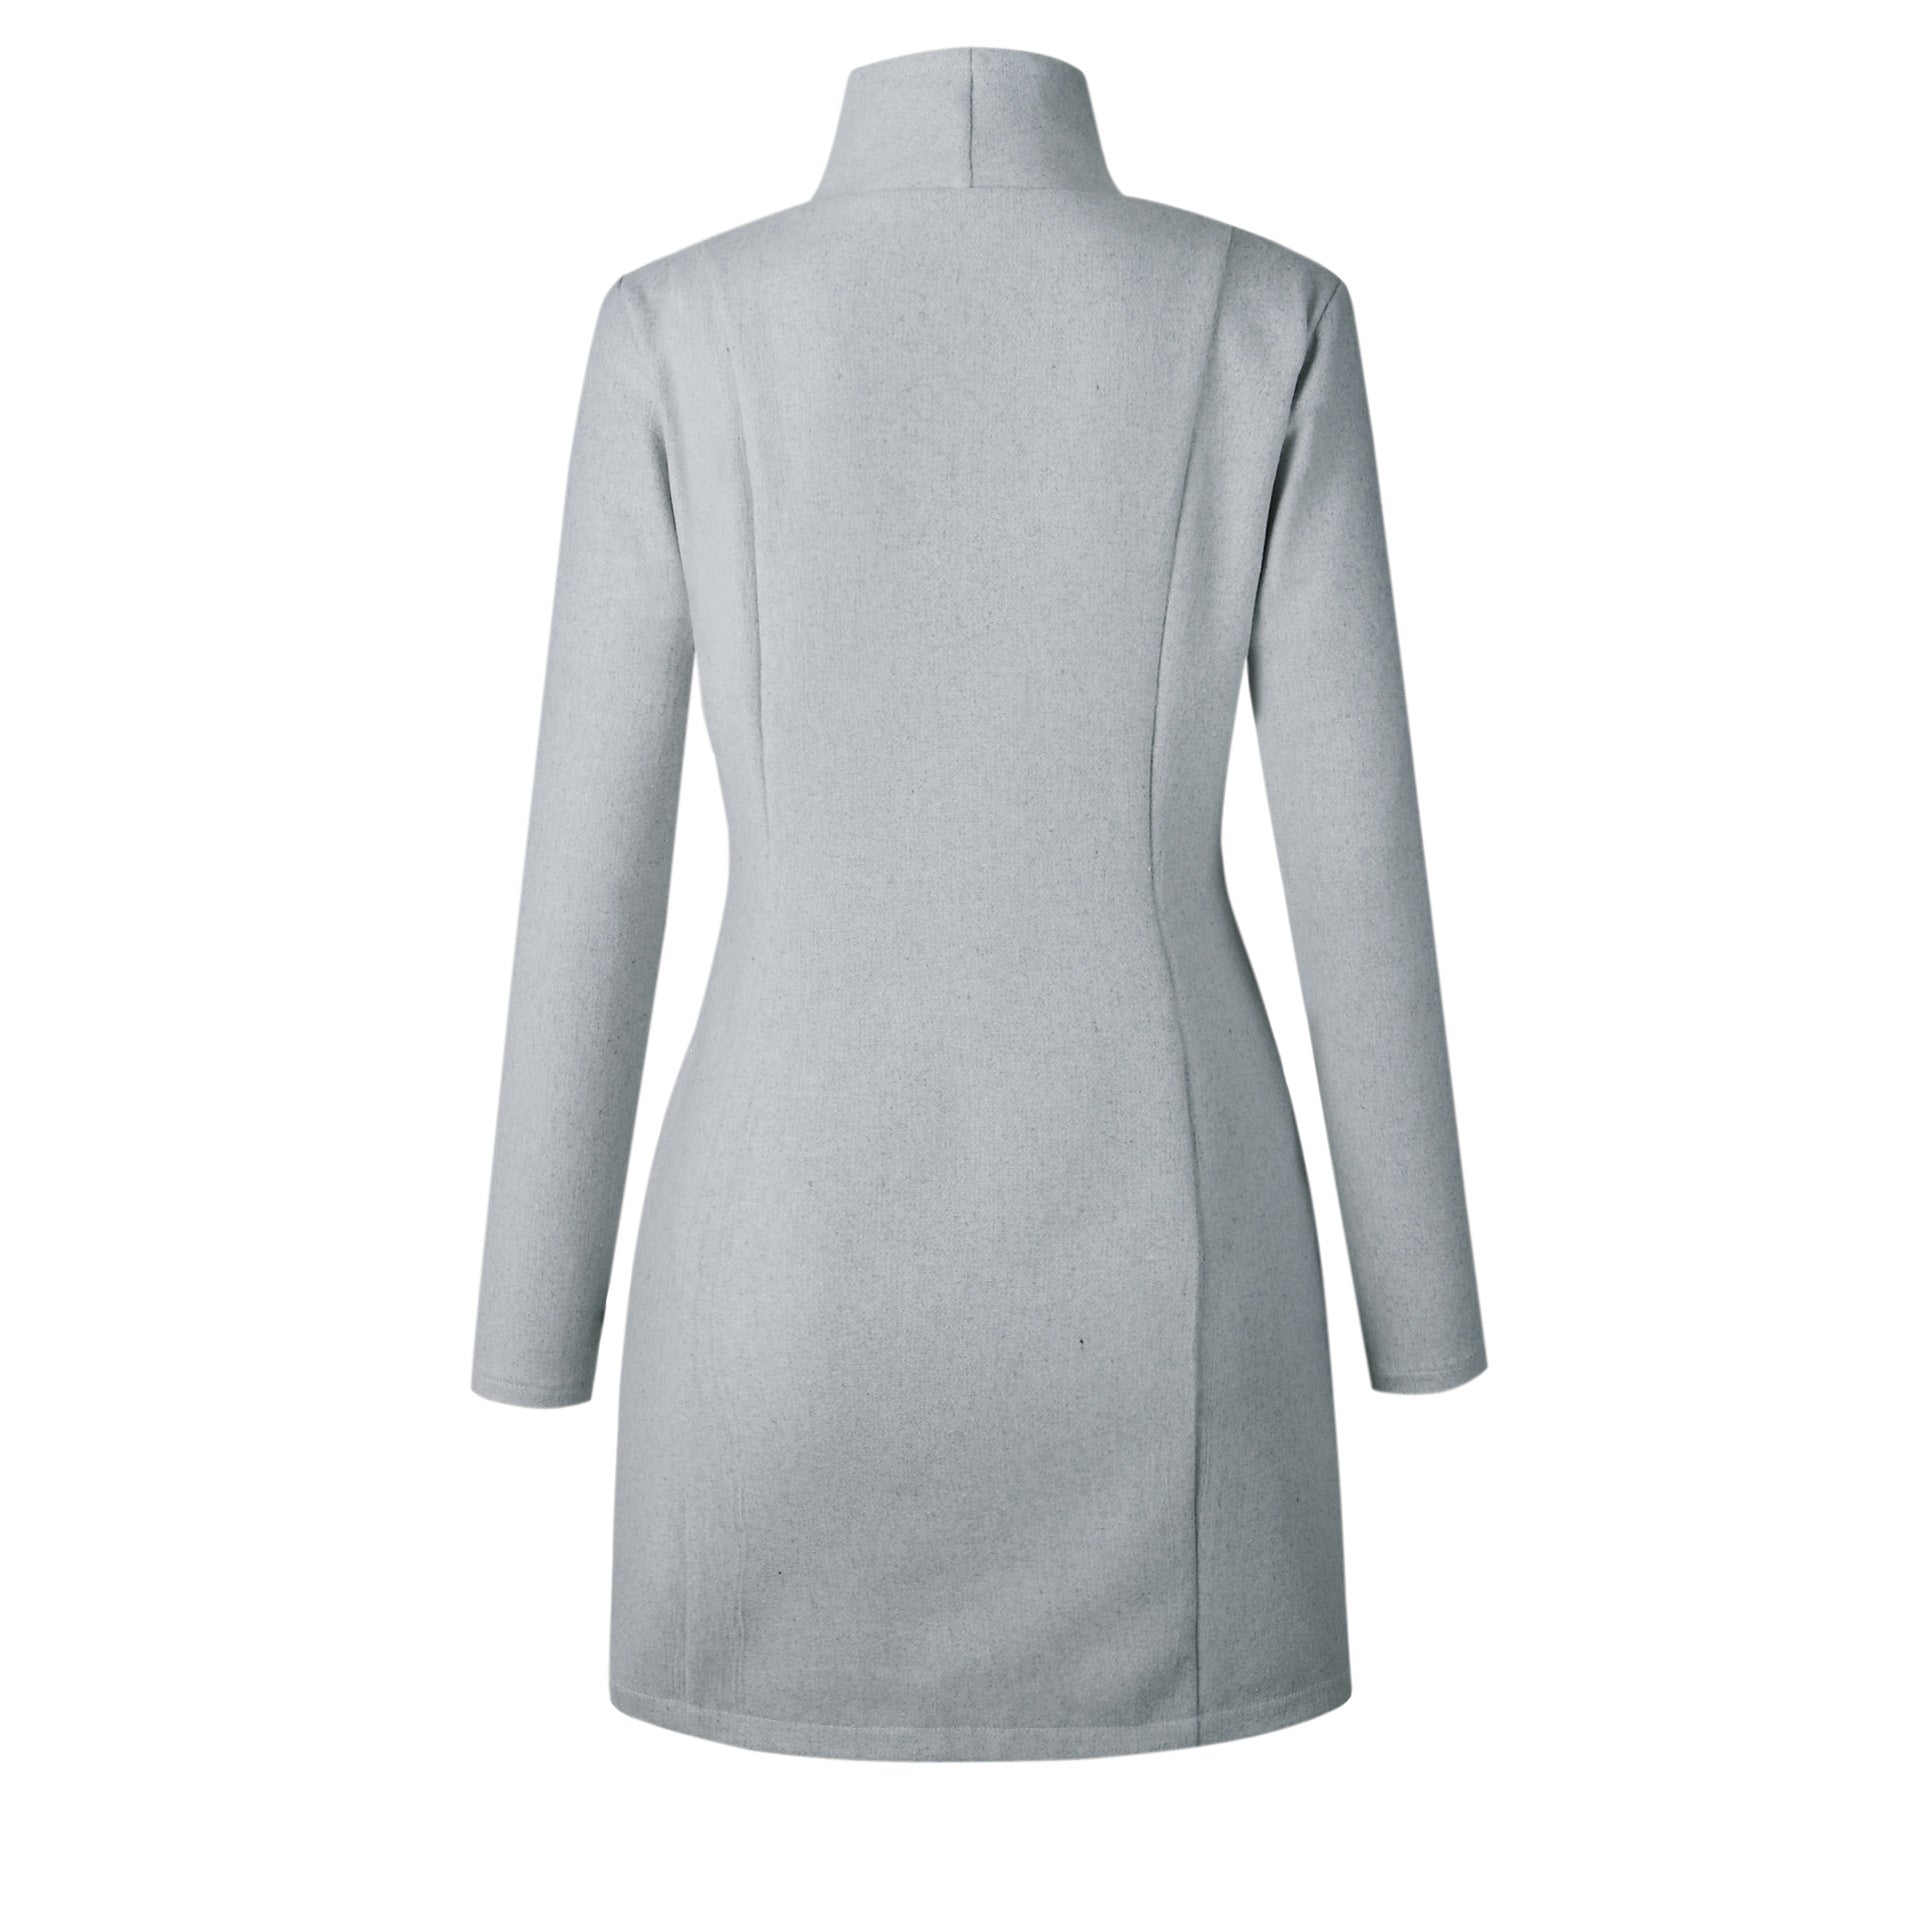 Stand Collar Oblique Zipper Women Irregular Oversized Coat